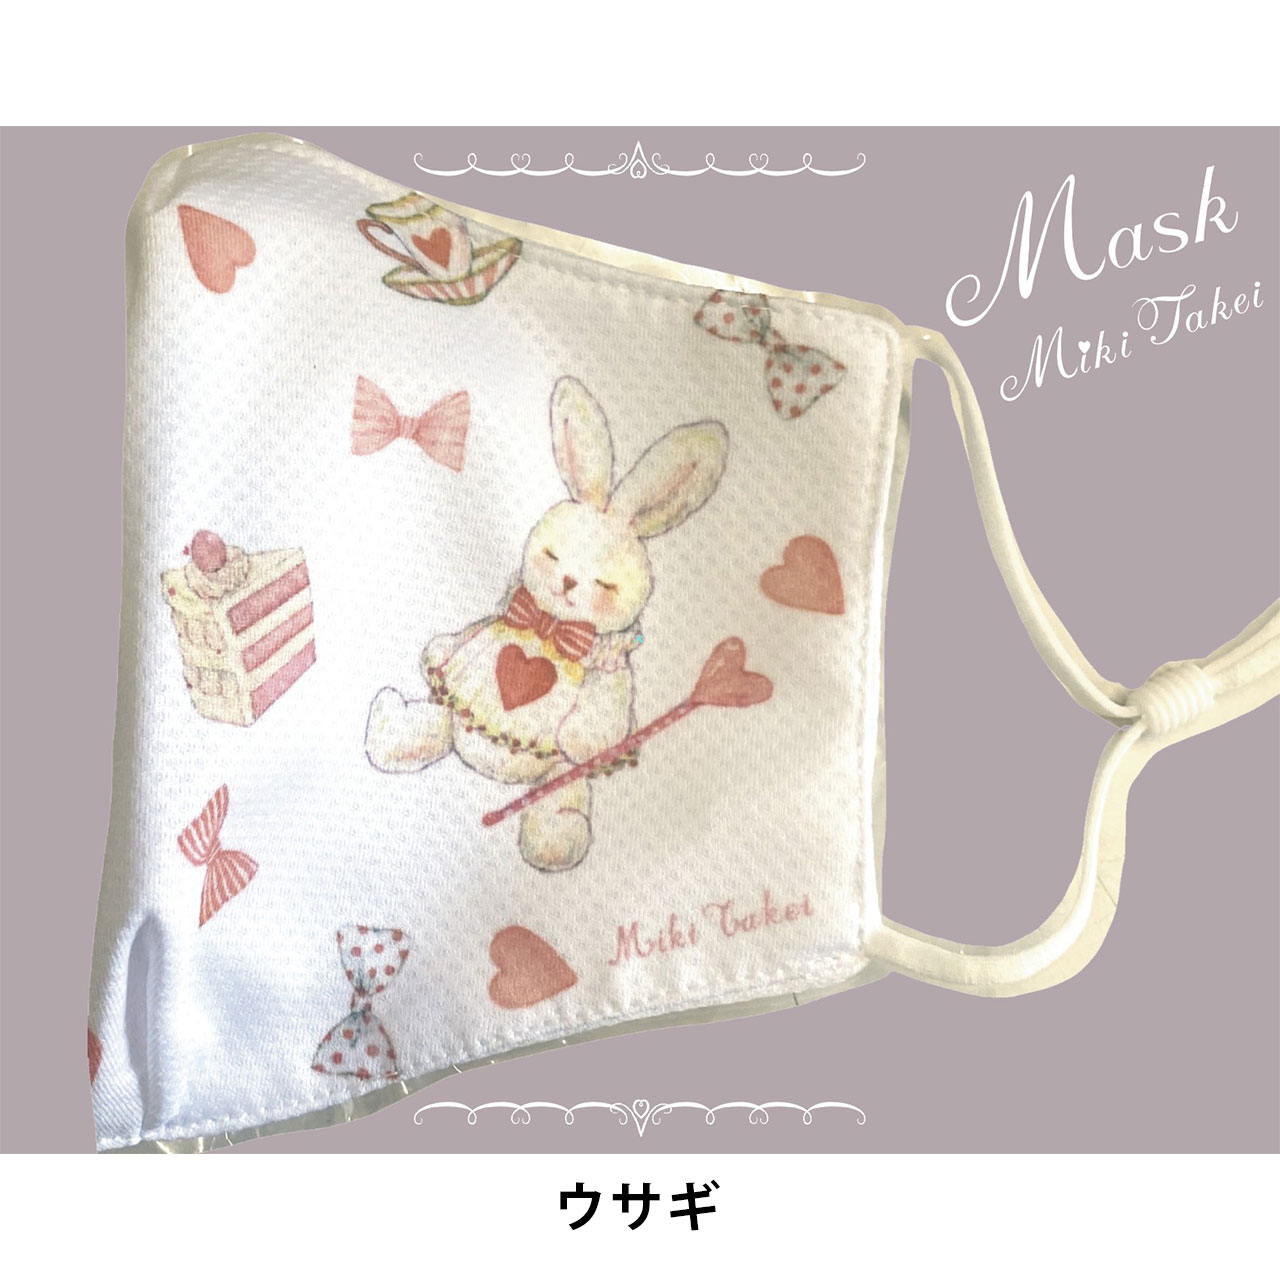 【miki takei】新商品のプレベントマスクが入荷しました！